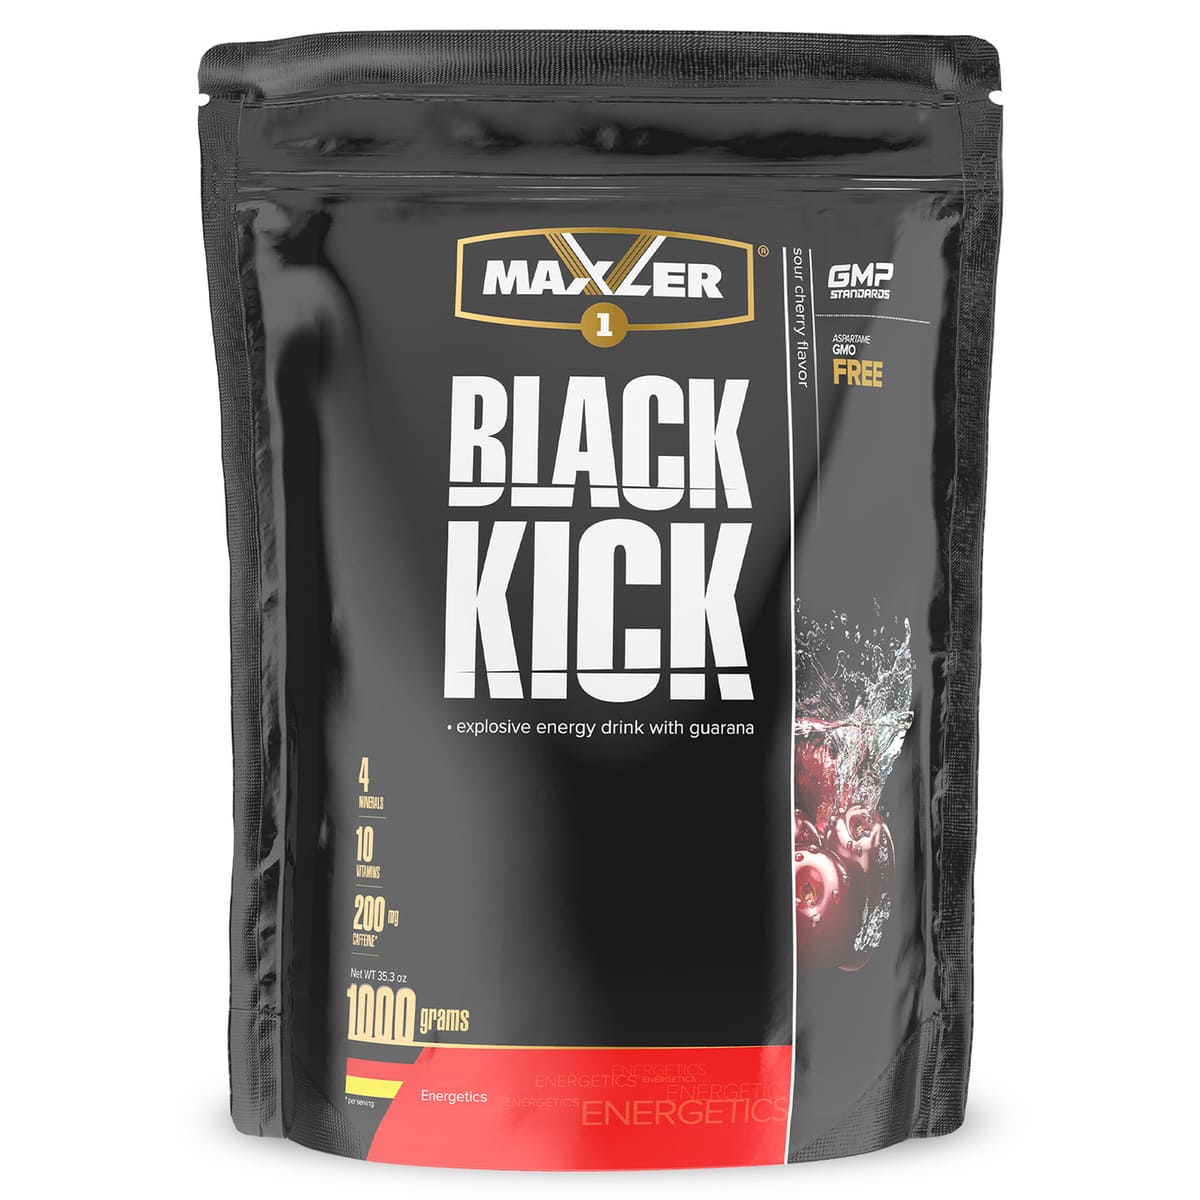 Maxler Black Kick Энергетический напиток 1000 гр.